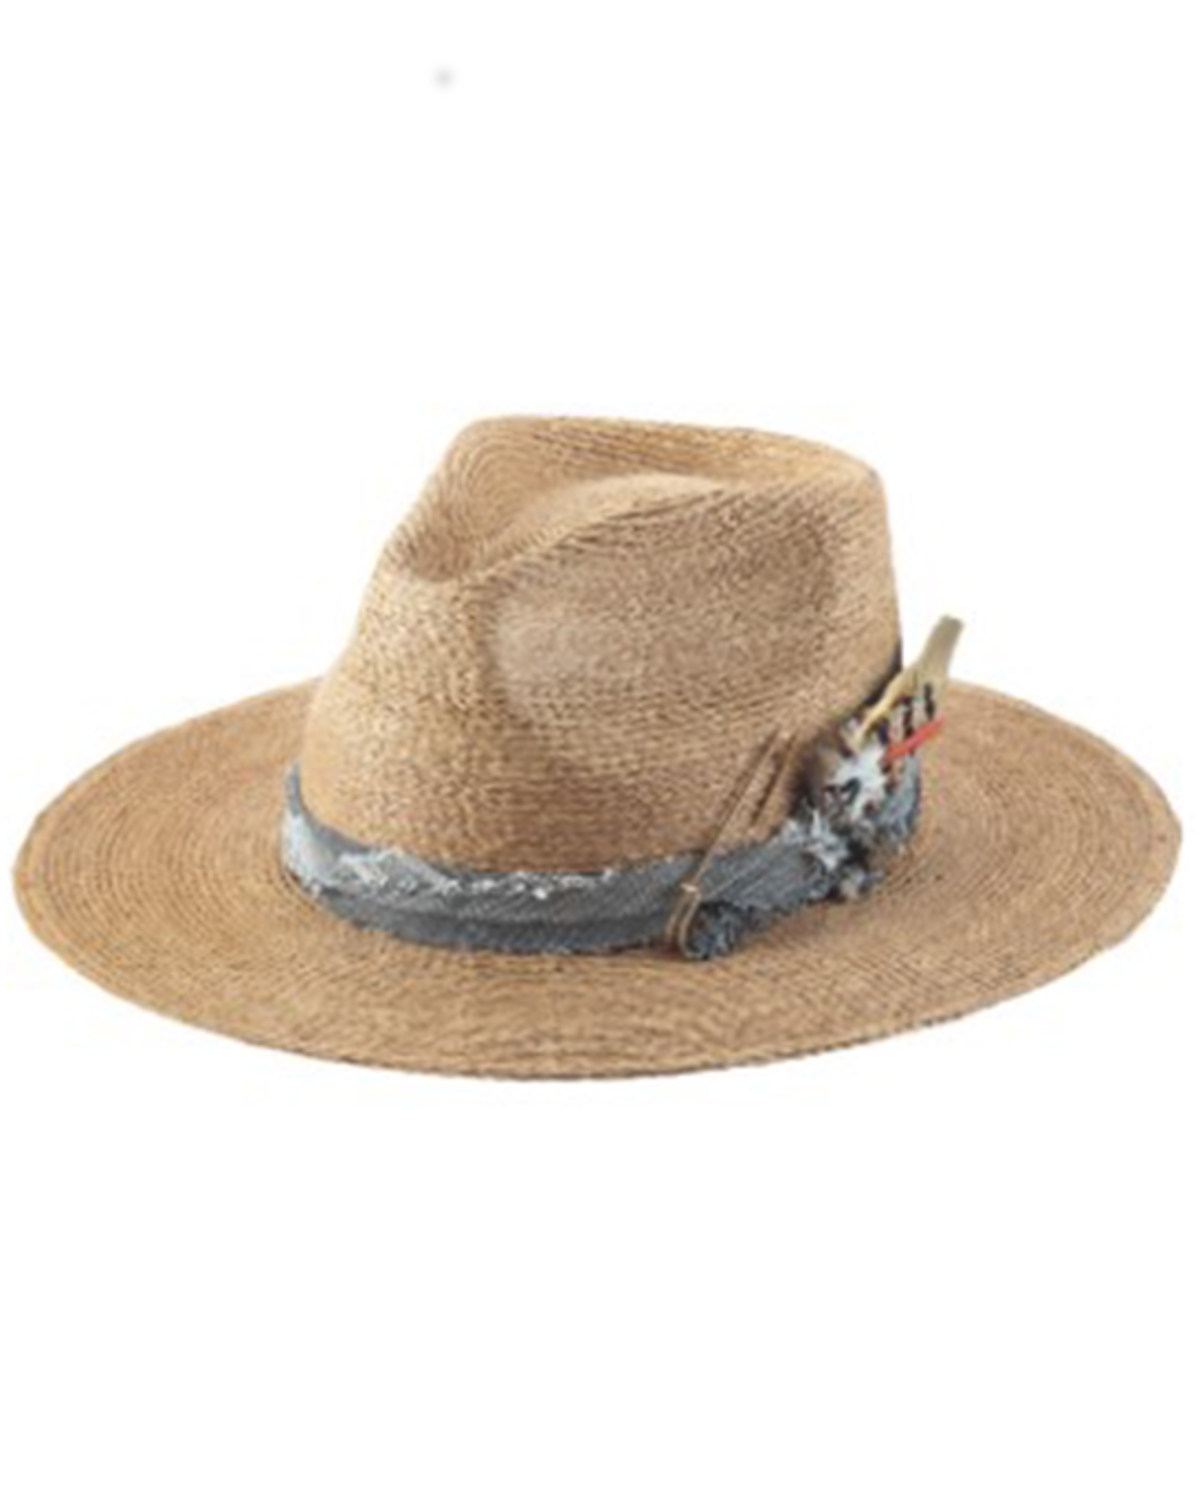 Bullhide Men's Passion Straw Western Fashion Hat